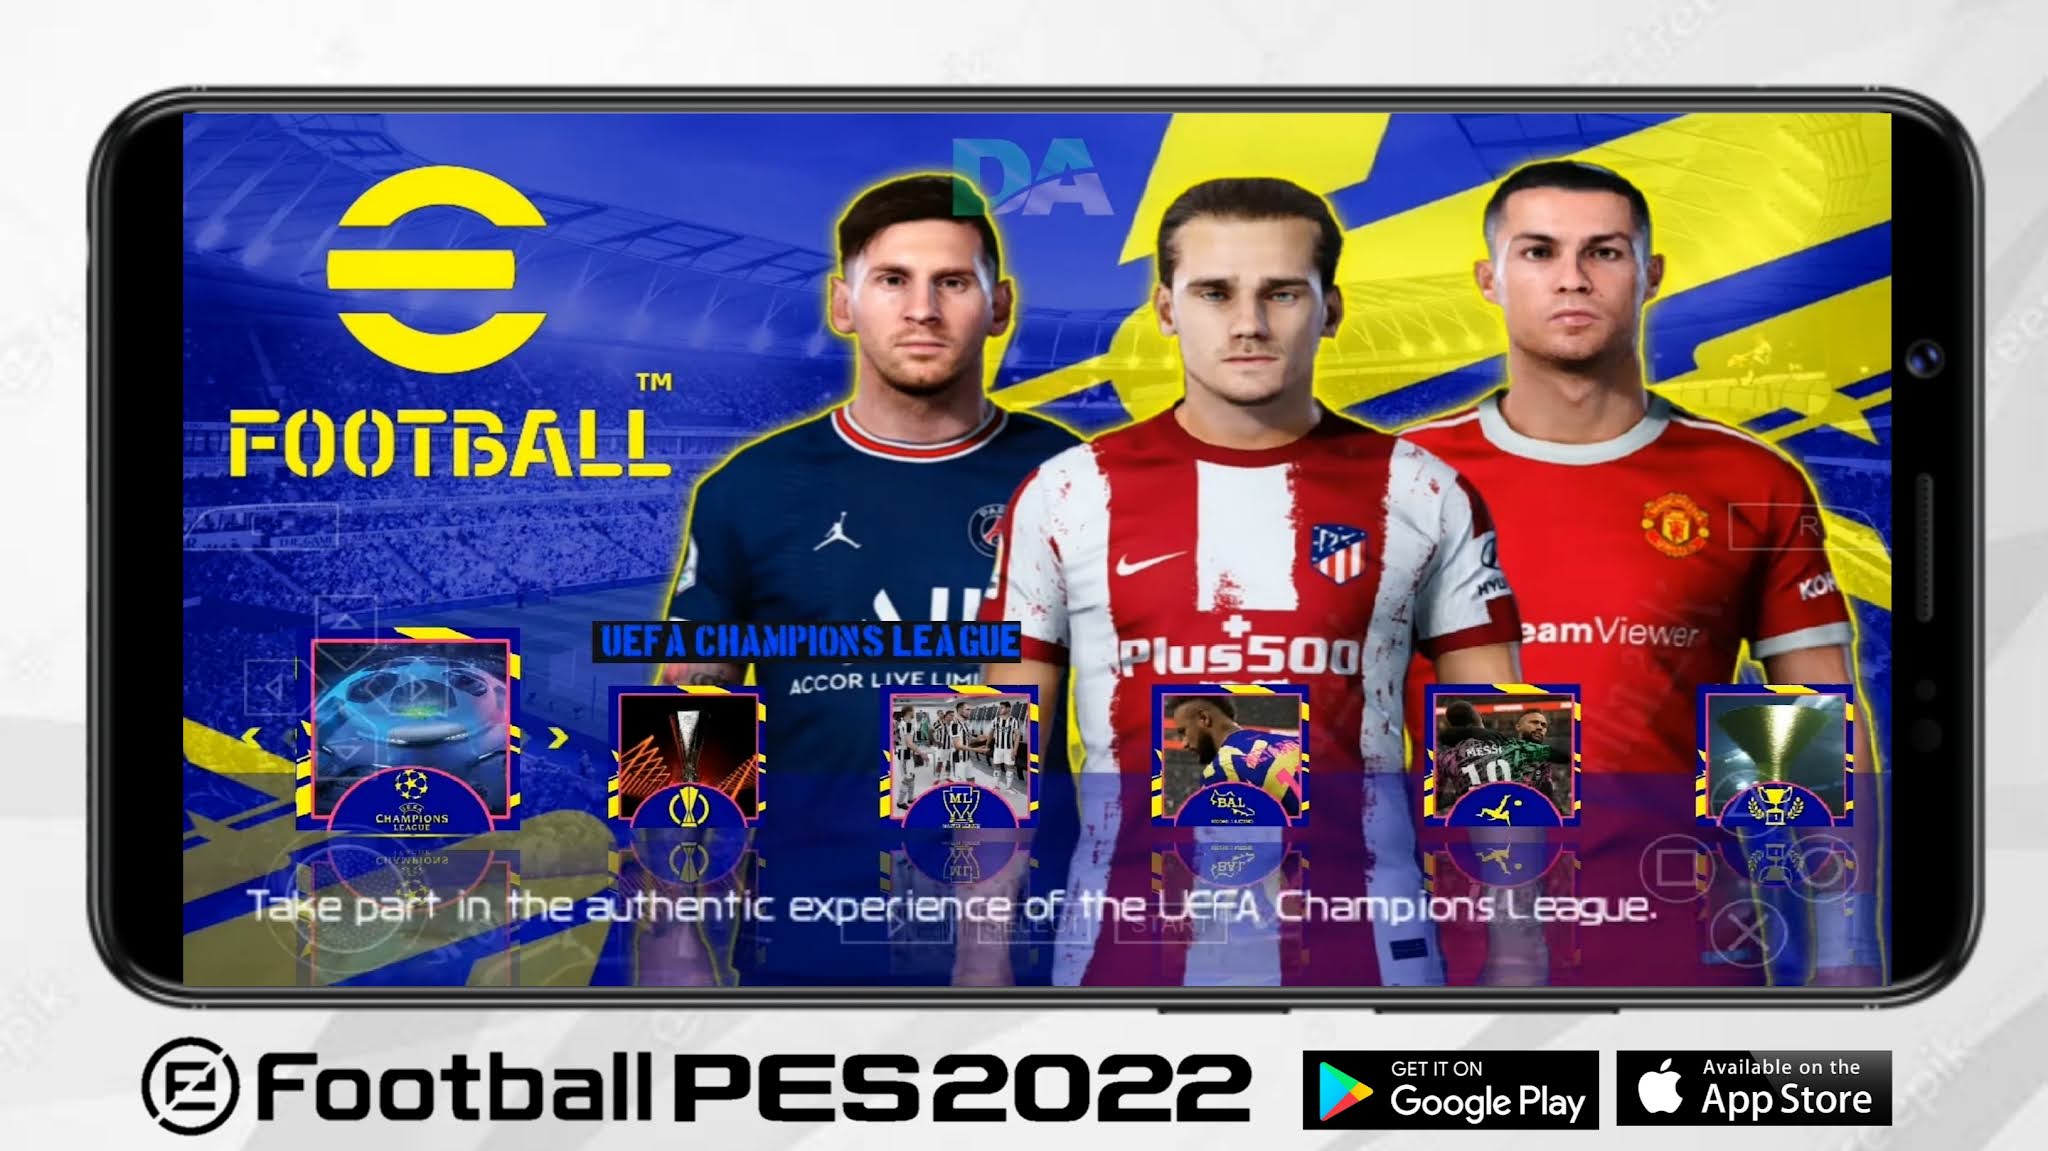 eFootball 2023 - Baixar para PPSPP Android - Mundo Android